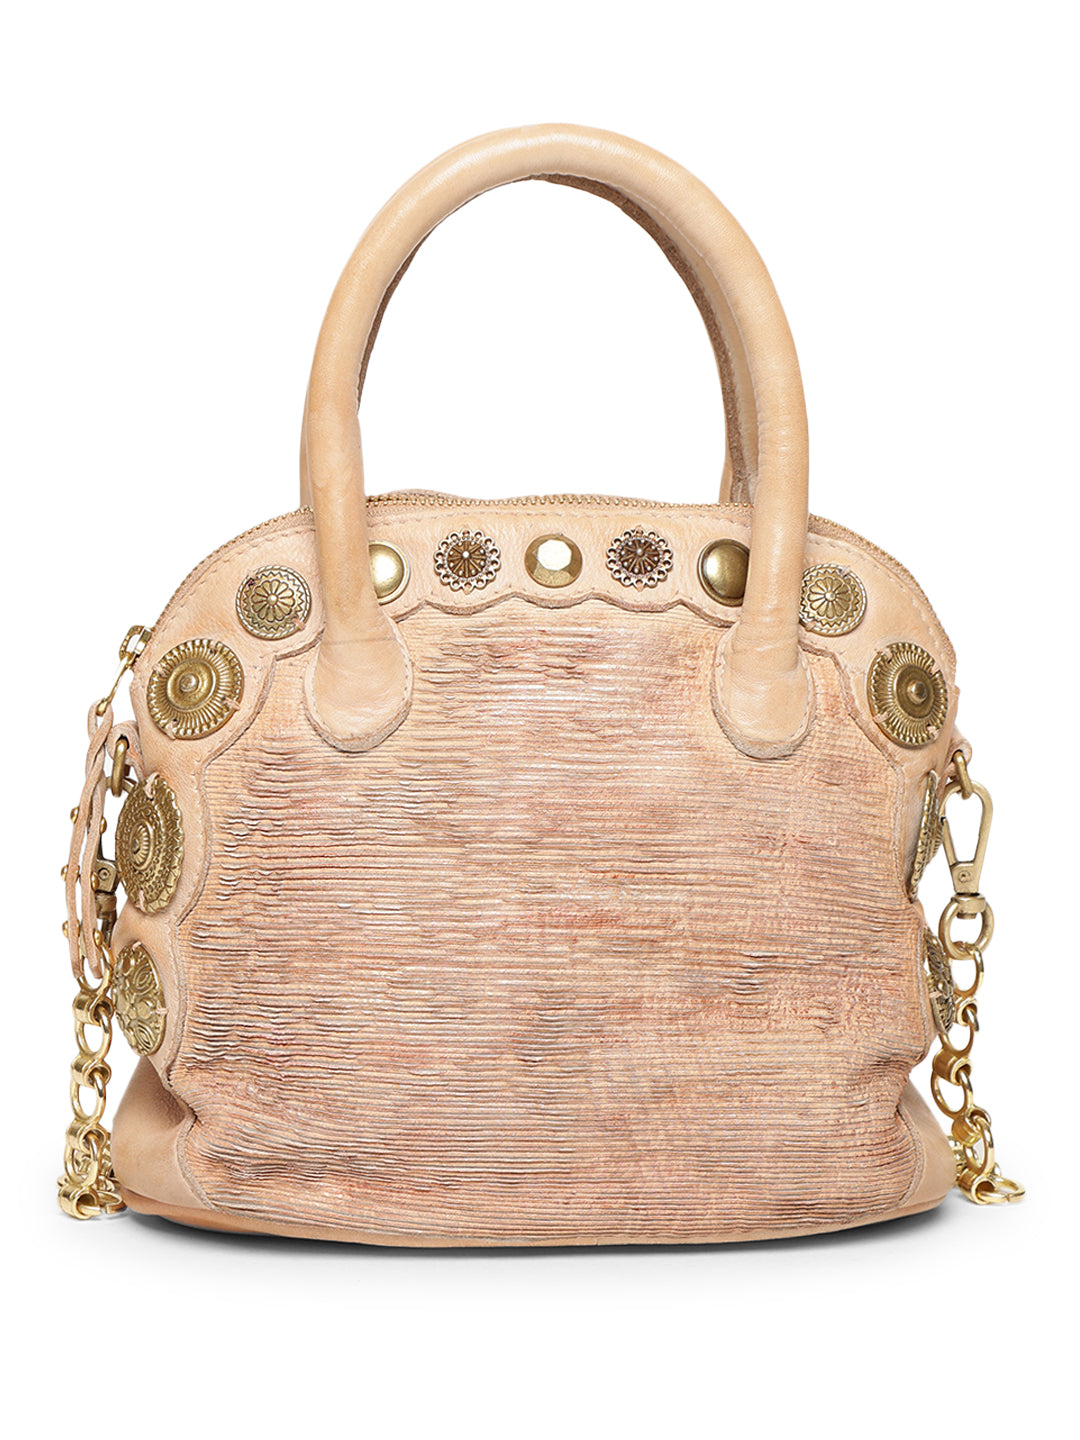 SILVIA: Cream Leather Women Handbag By Art N Vintage